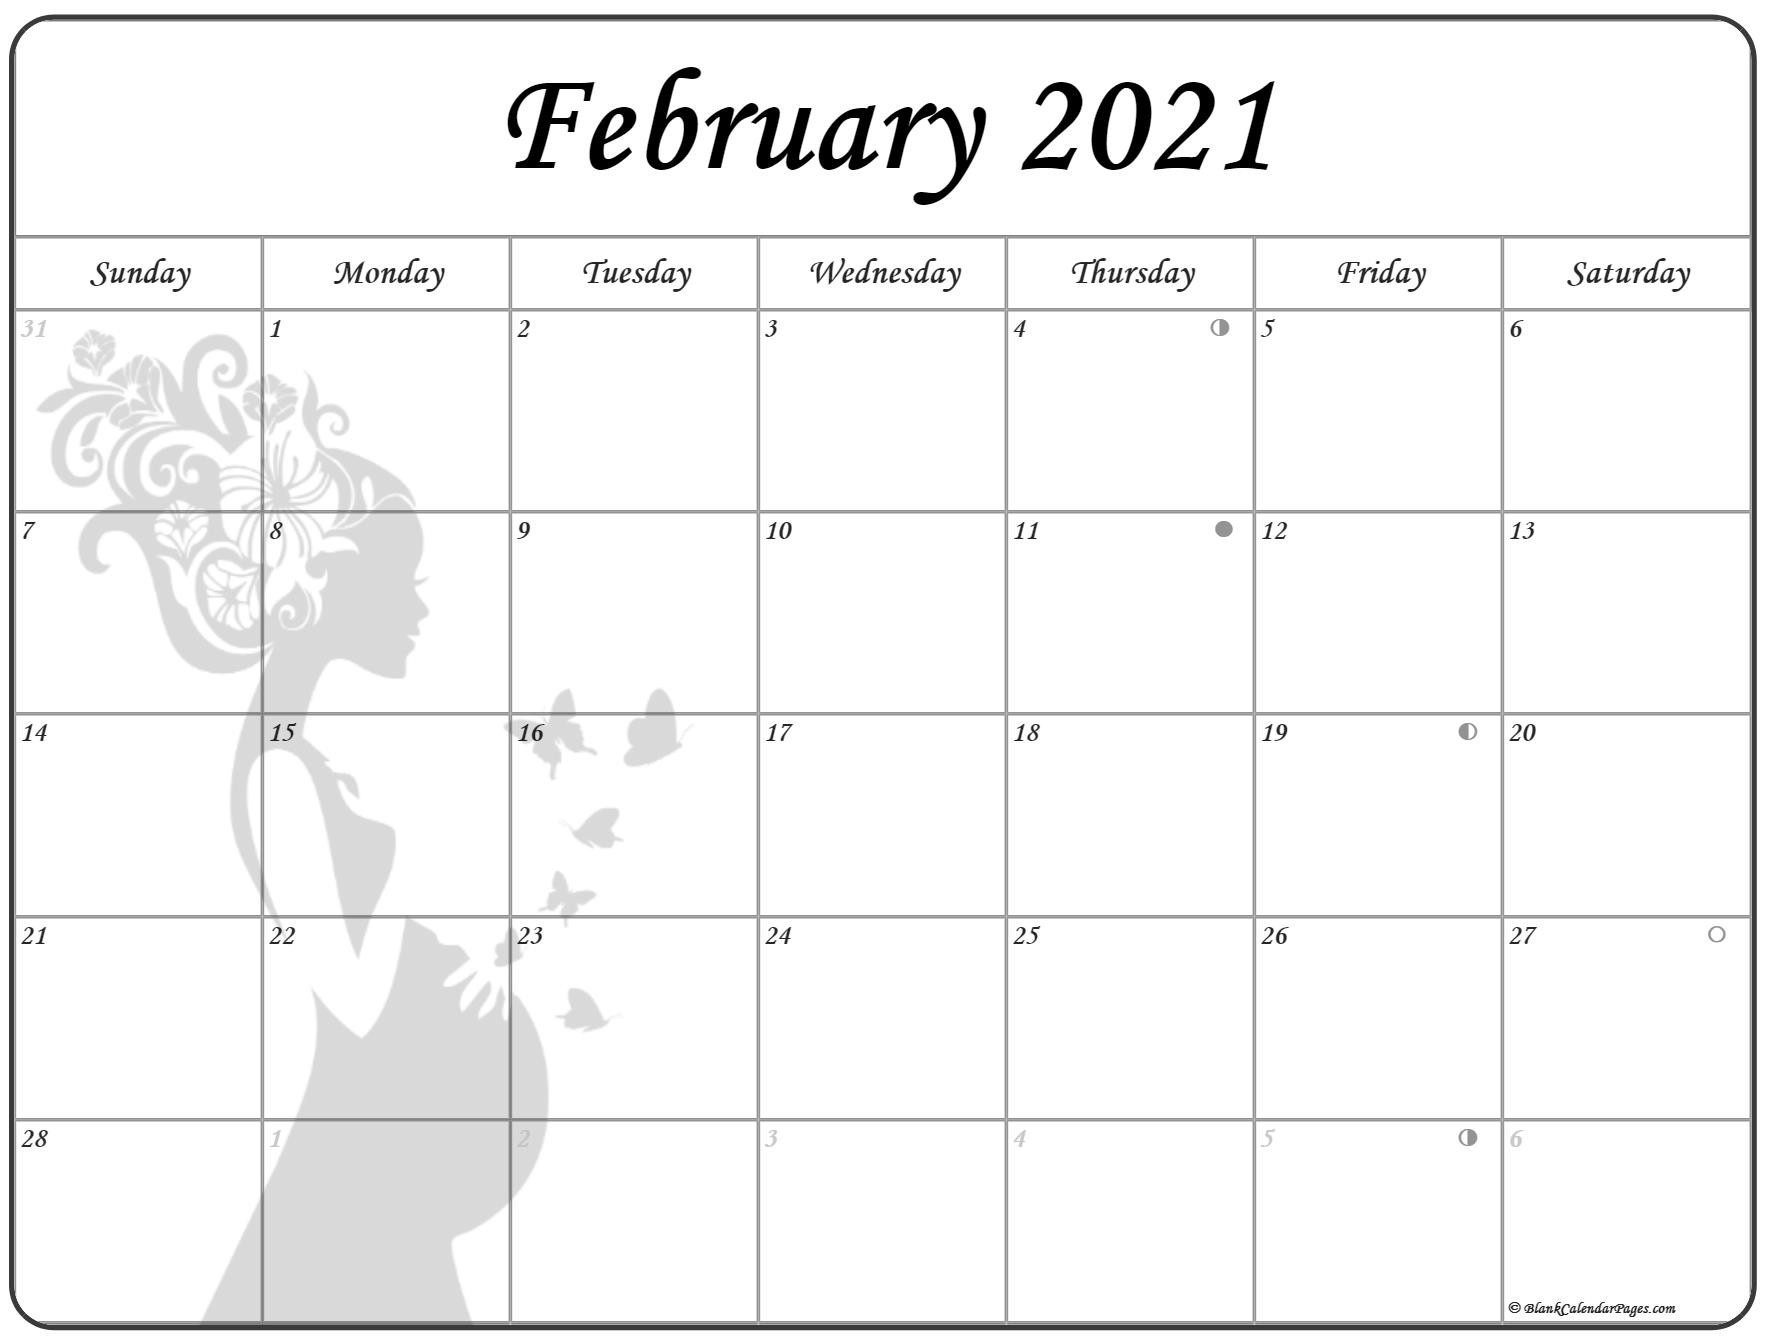 February 2021 Full Moon Phases Calendar - Calendar 2020 August 2021 Lunar Calendar